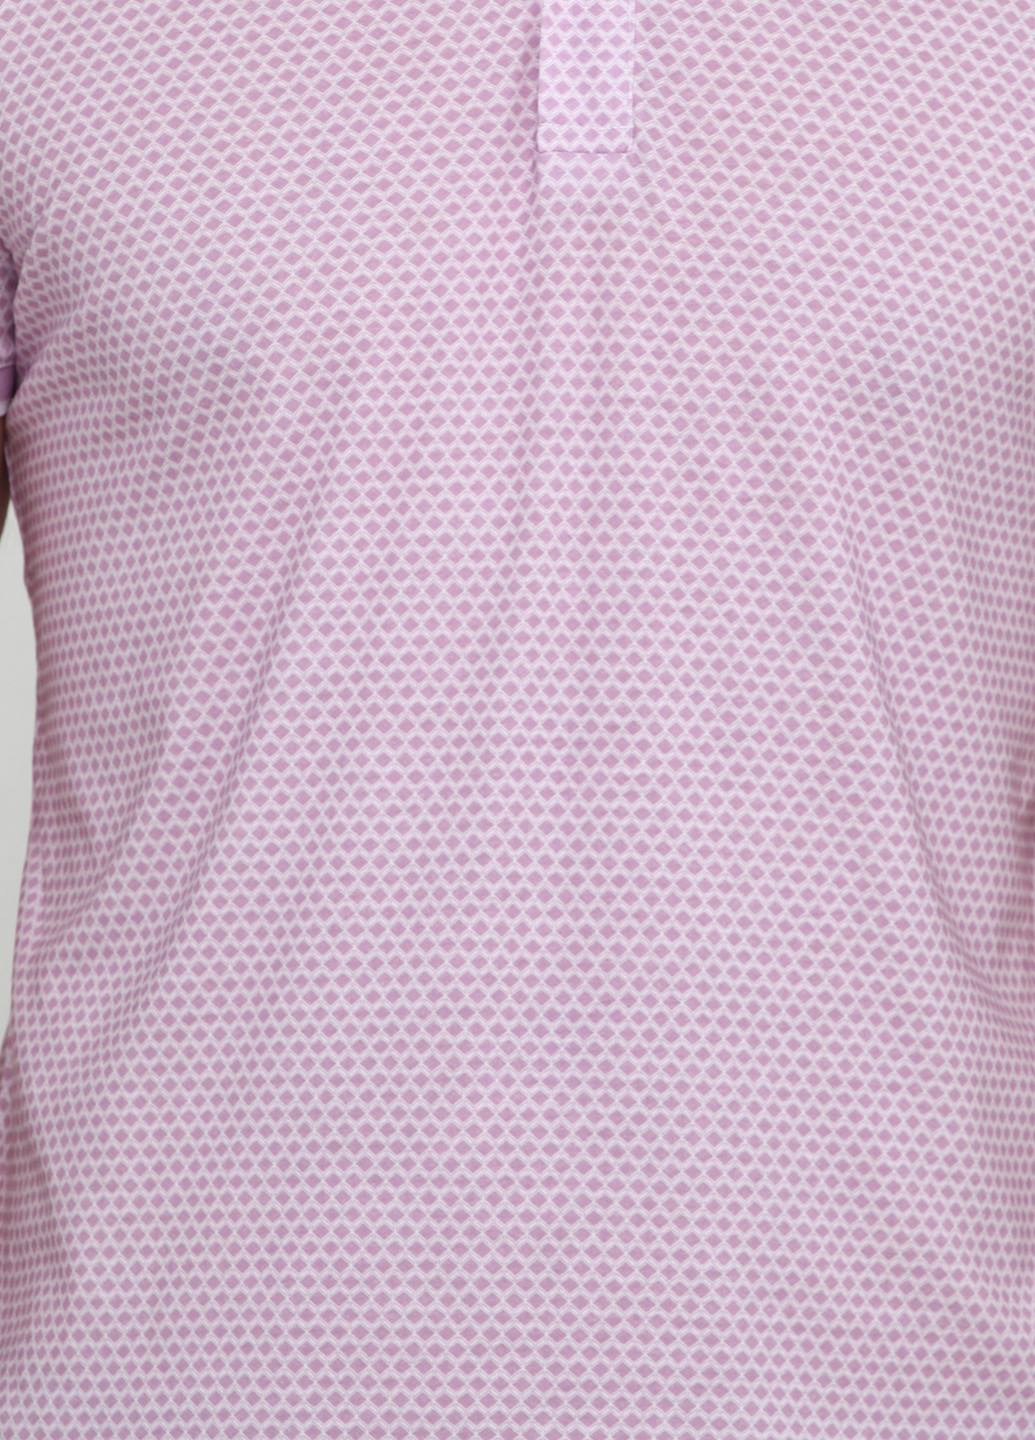 Сиреневая футболка-поло для мужчин Ted Baker с геометрическим узором